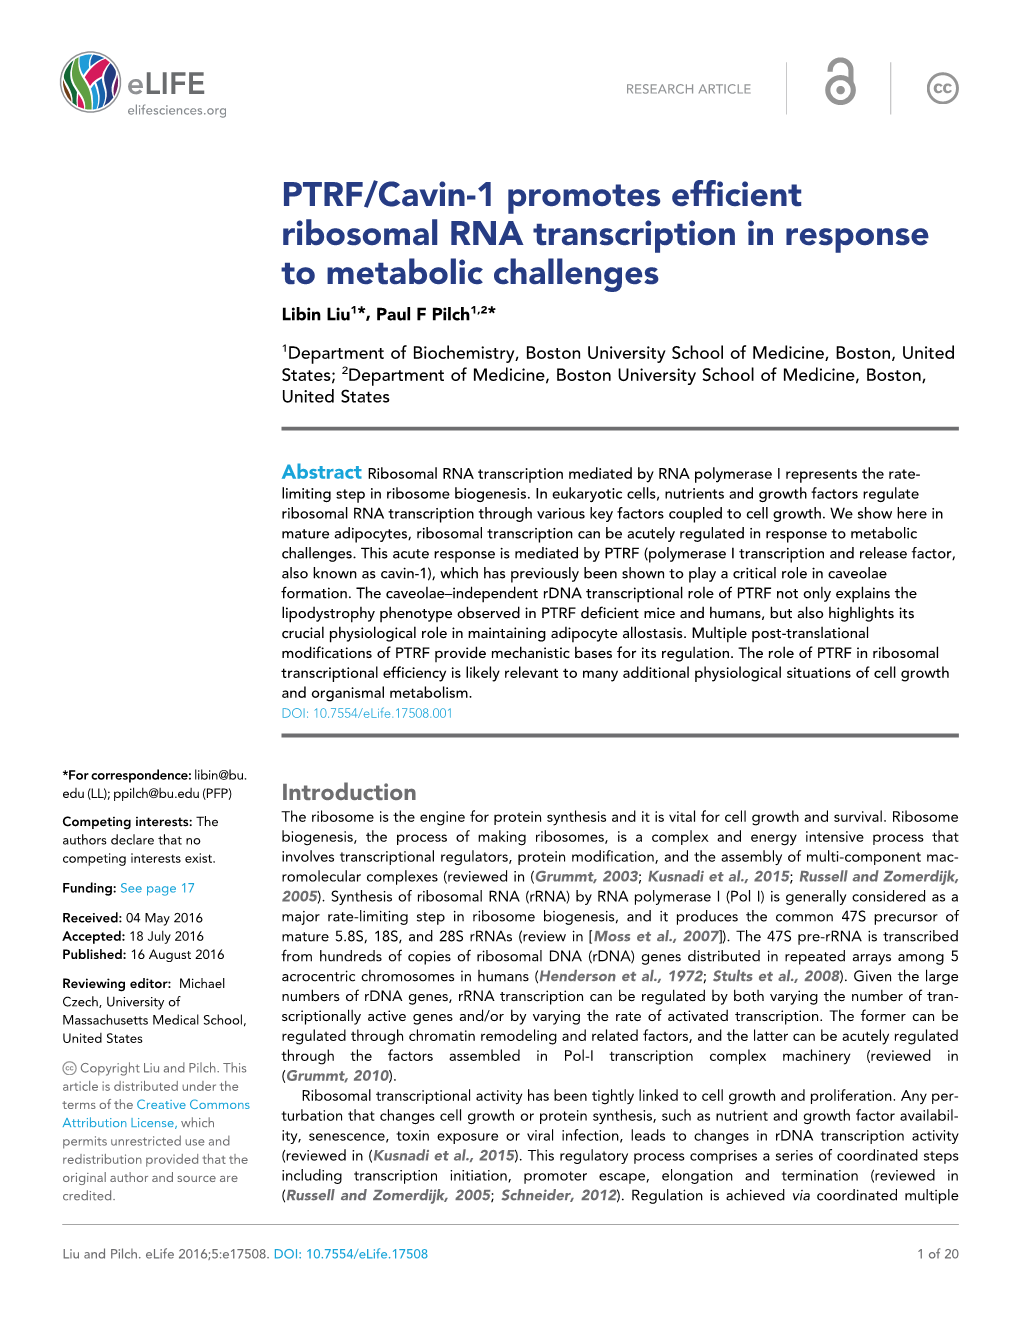 PTRF/Cavin-1 Promotes Efficient Ribosomal RNA Transcription in Response to Metabolic Challenges Libin Liu1*, Paul F Pilch1,2*